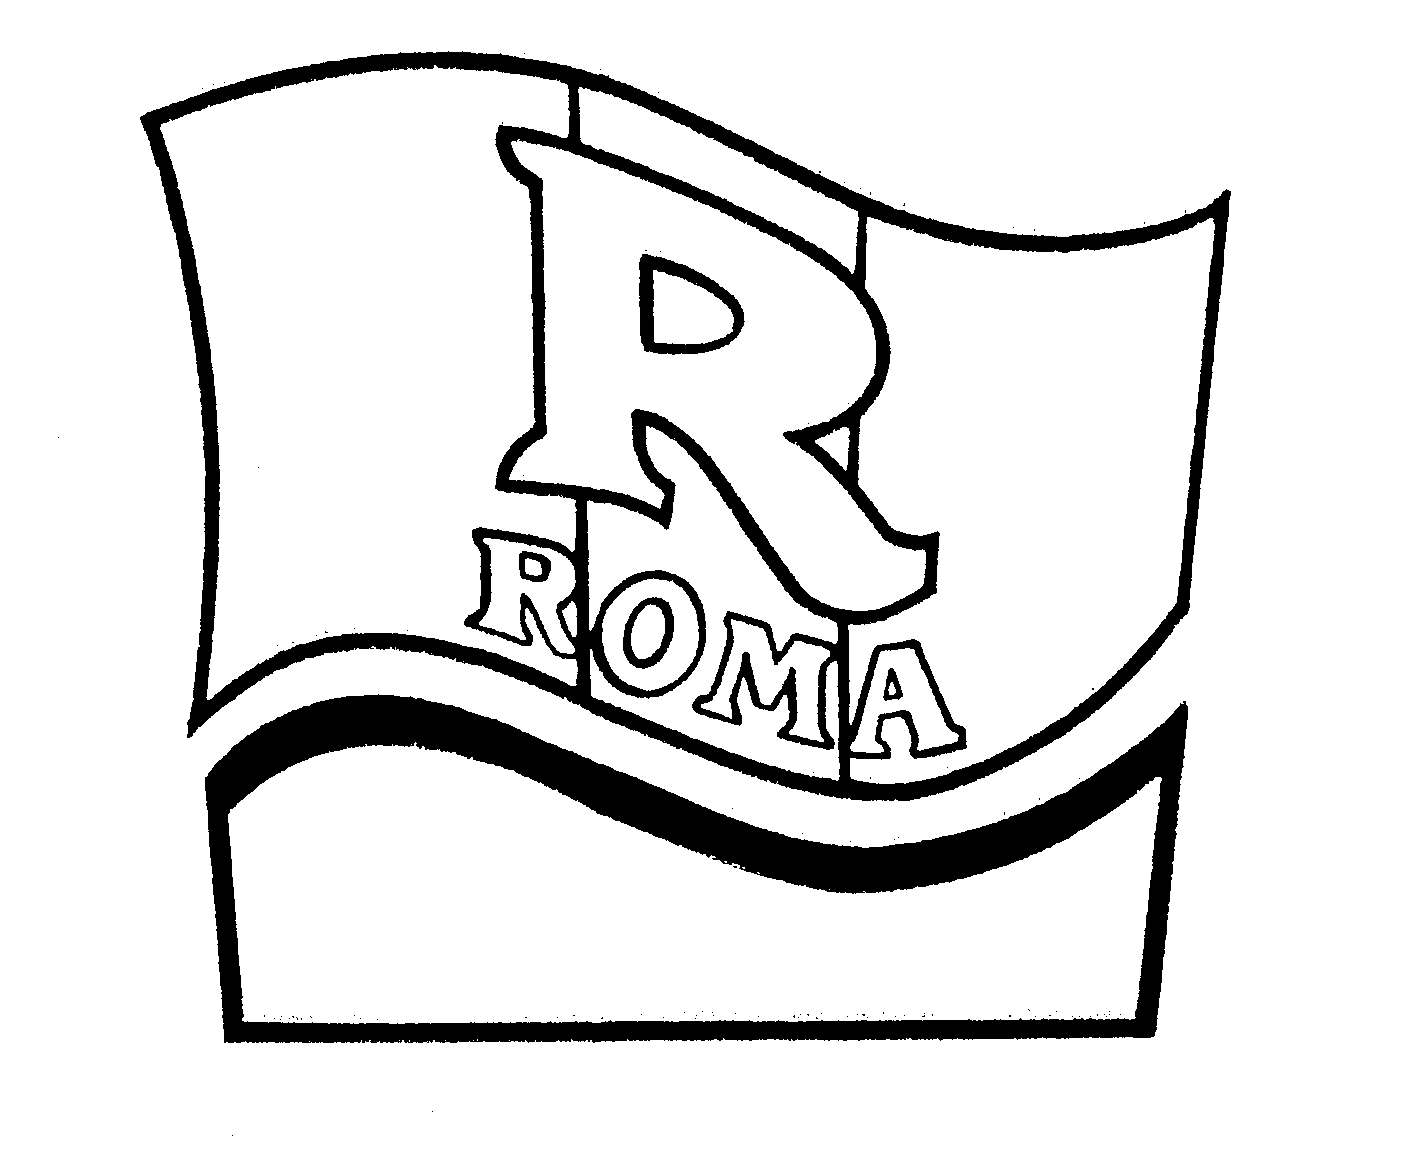 R ROMA